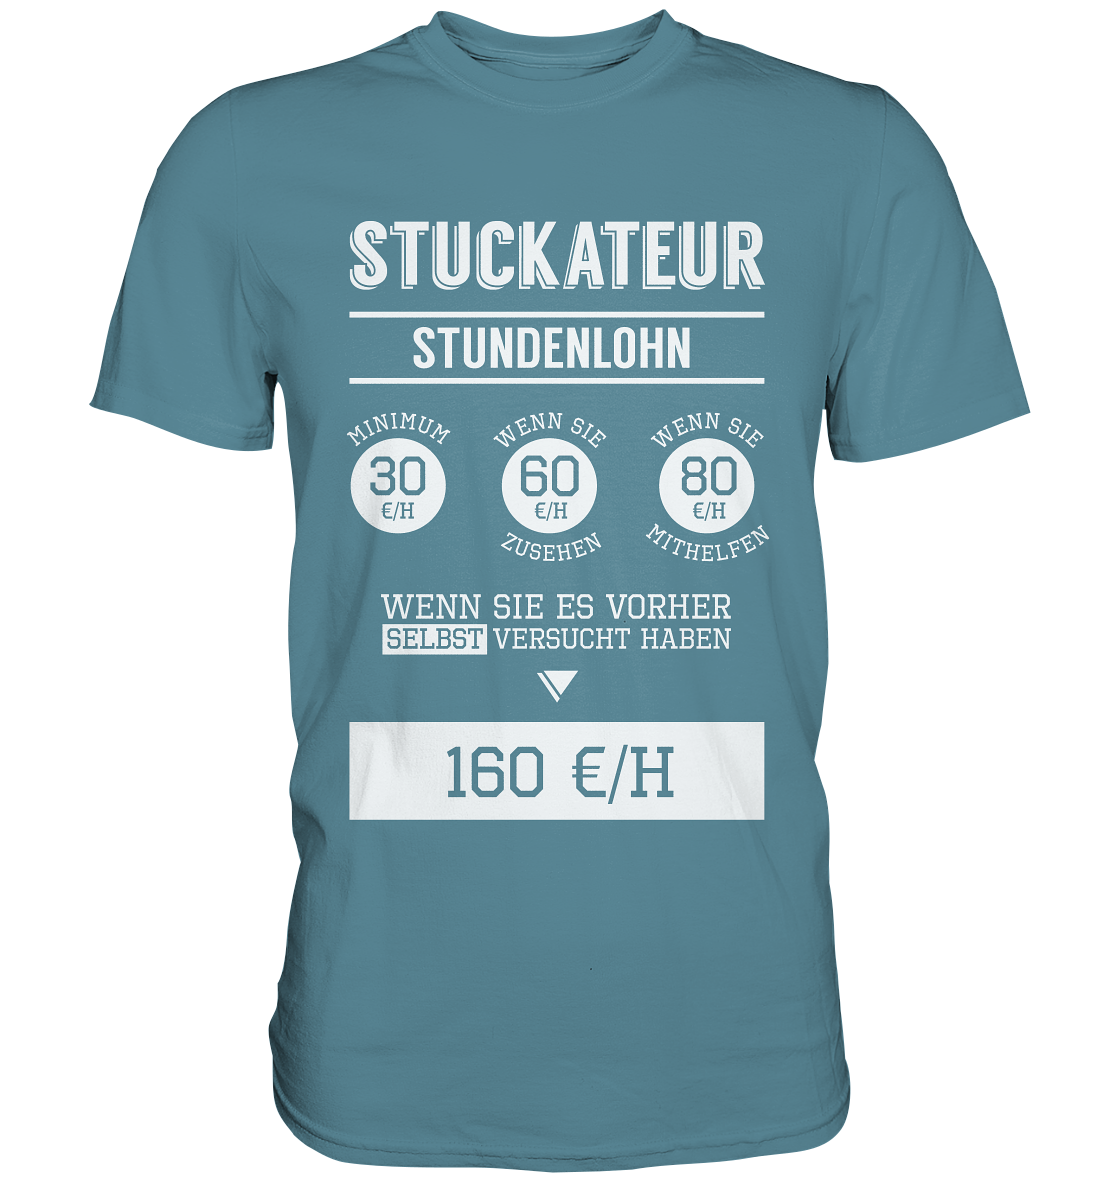 Stuckateur Stundenlohn / Druck weiß / Männer Premium Shirt - Baufun Shop